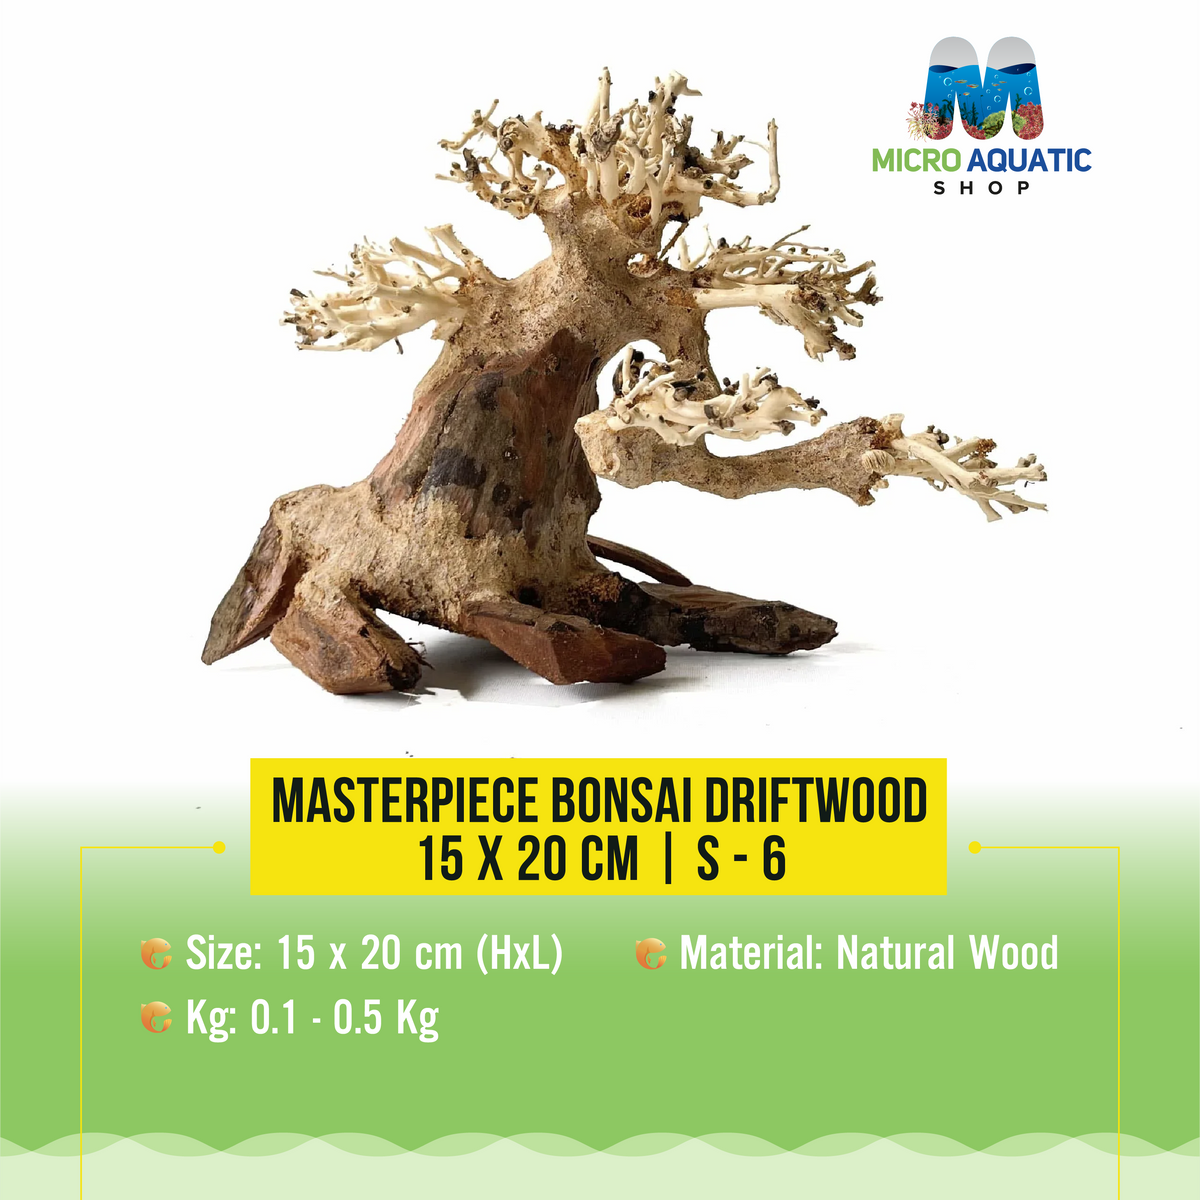 Masterpiece Bonsai Driftwood - 15 x 20 cm | S - 6